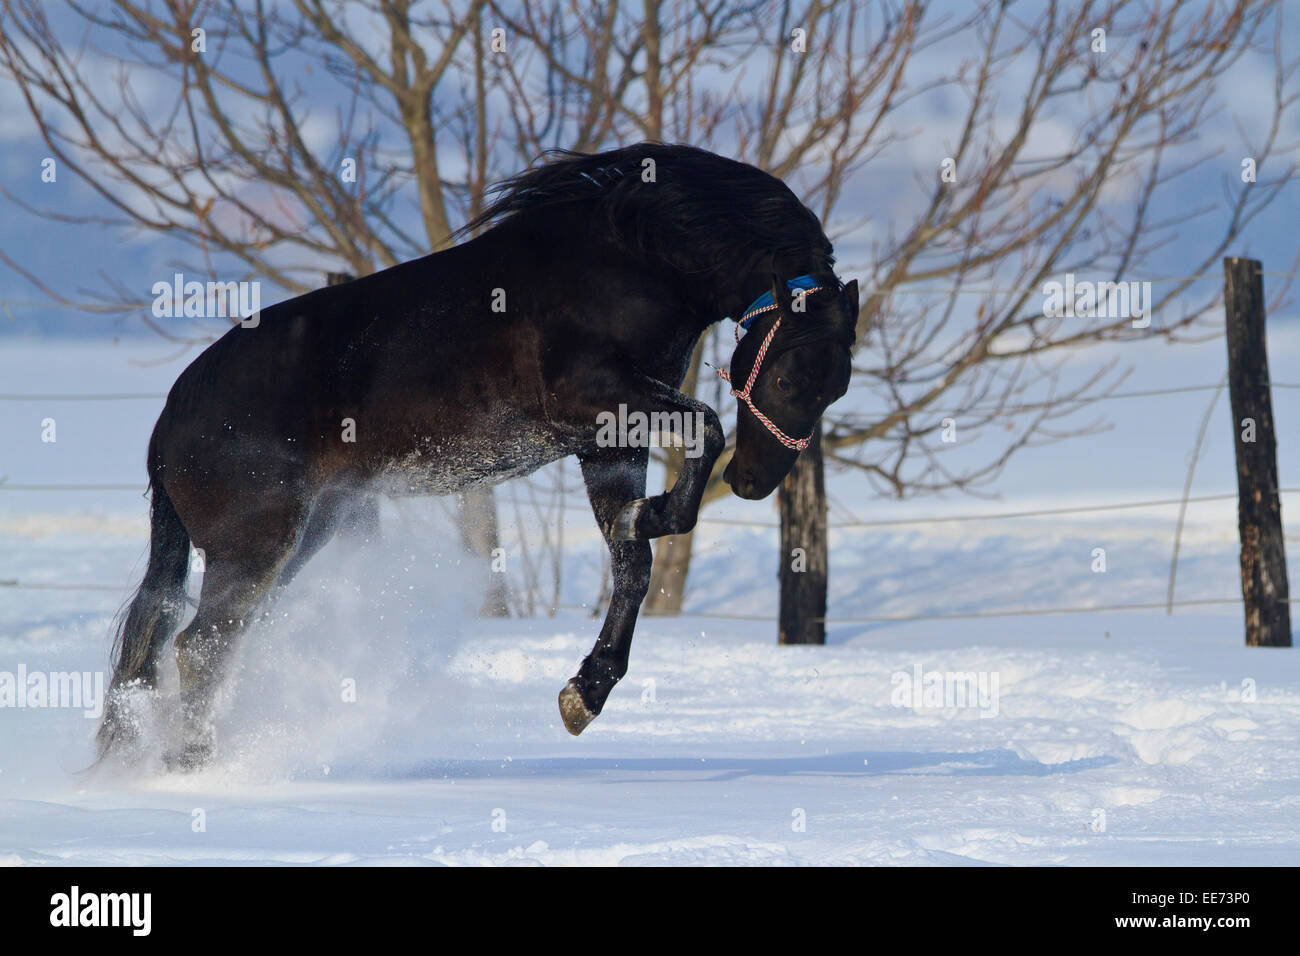 Horse jumping in snow, Baranja, Croatia Stock Photo